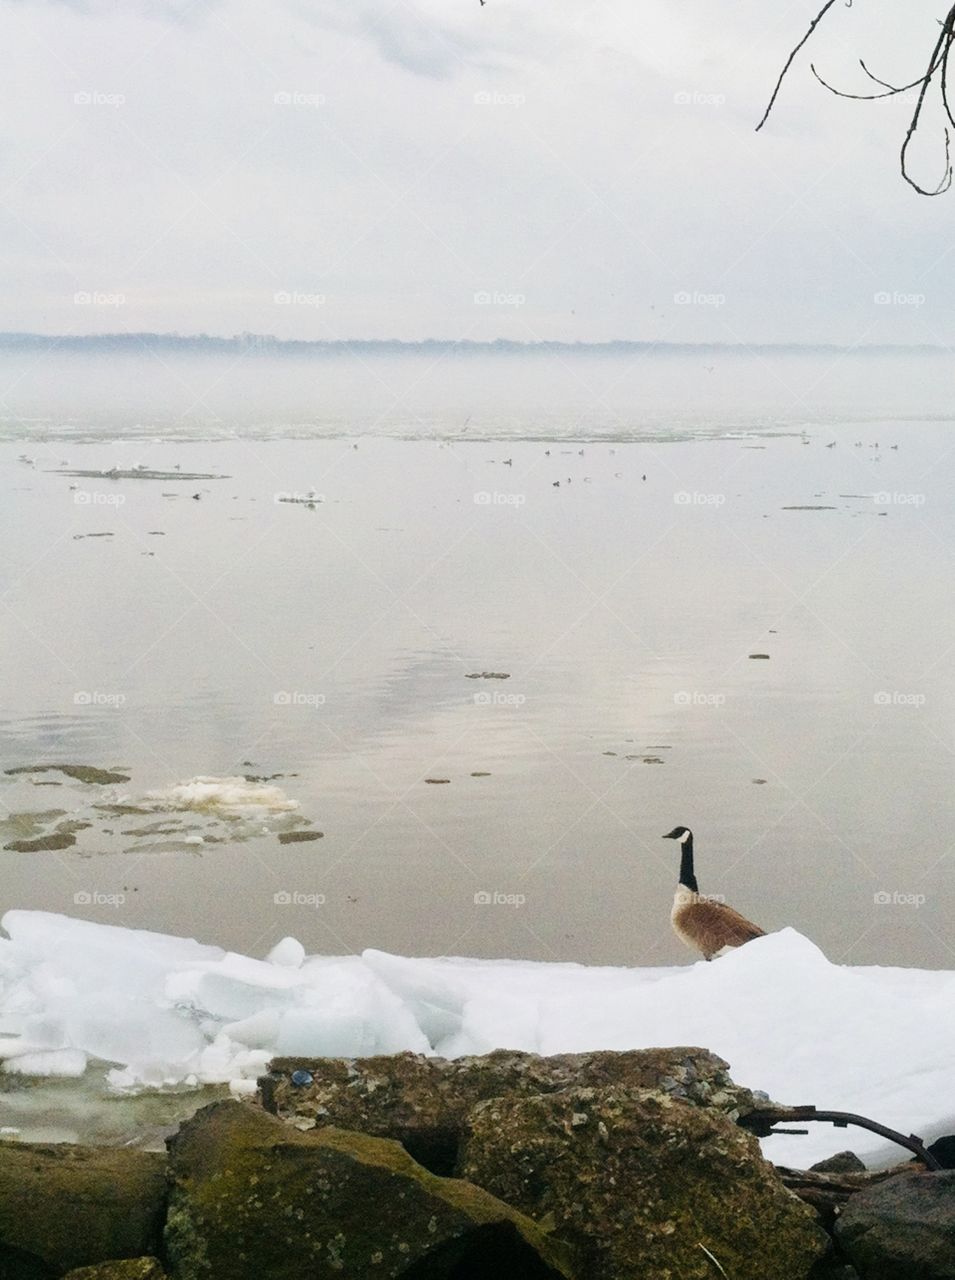 Canadian goose, Presque Isle, Erie PA